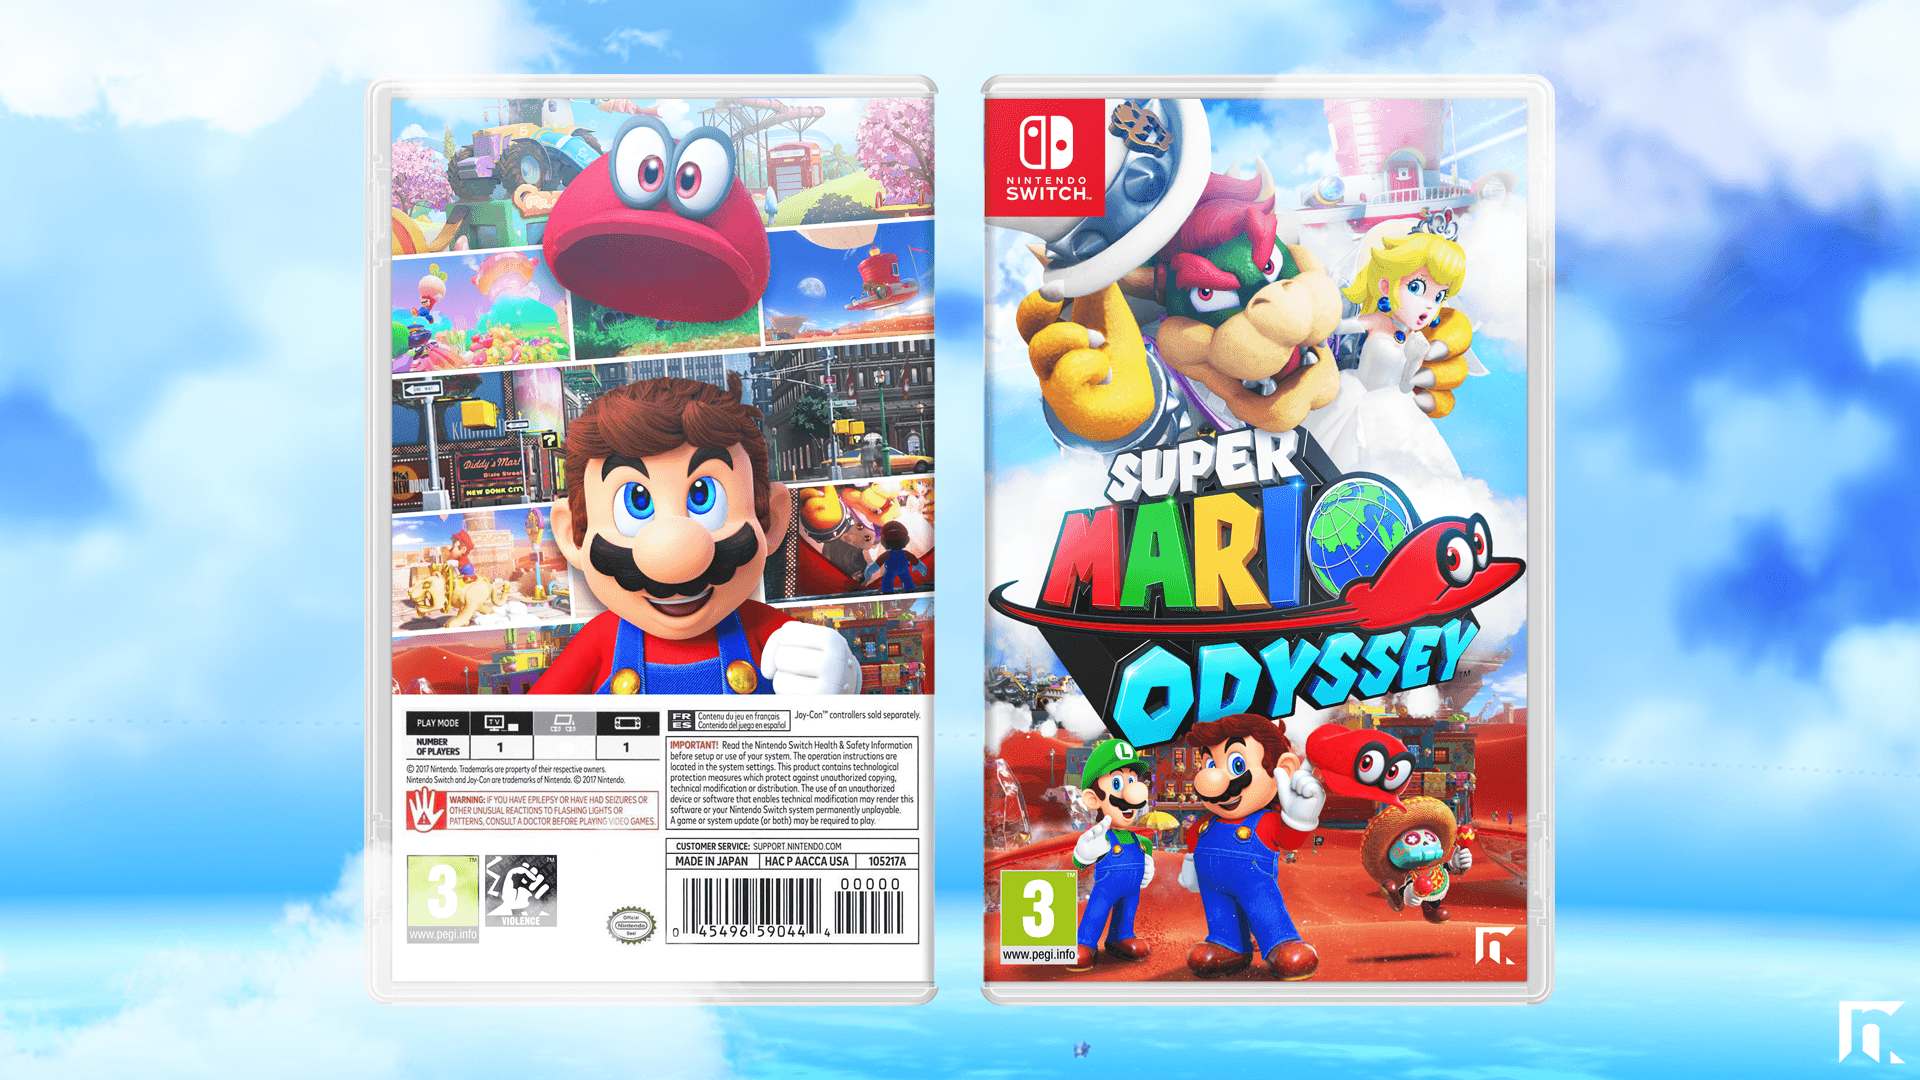 Super switch игра. Обложка super Mario Odyssey Nintendo Switch. Игра Марио для Нинтендо Switch. Диск супер Марио Одиссей Nintendo Switch. Nintendo Switch Cover super Mario Odyssey.